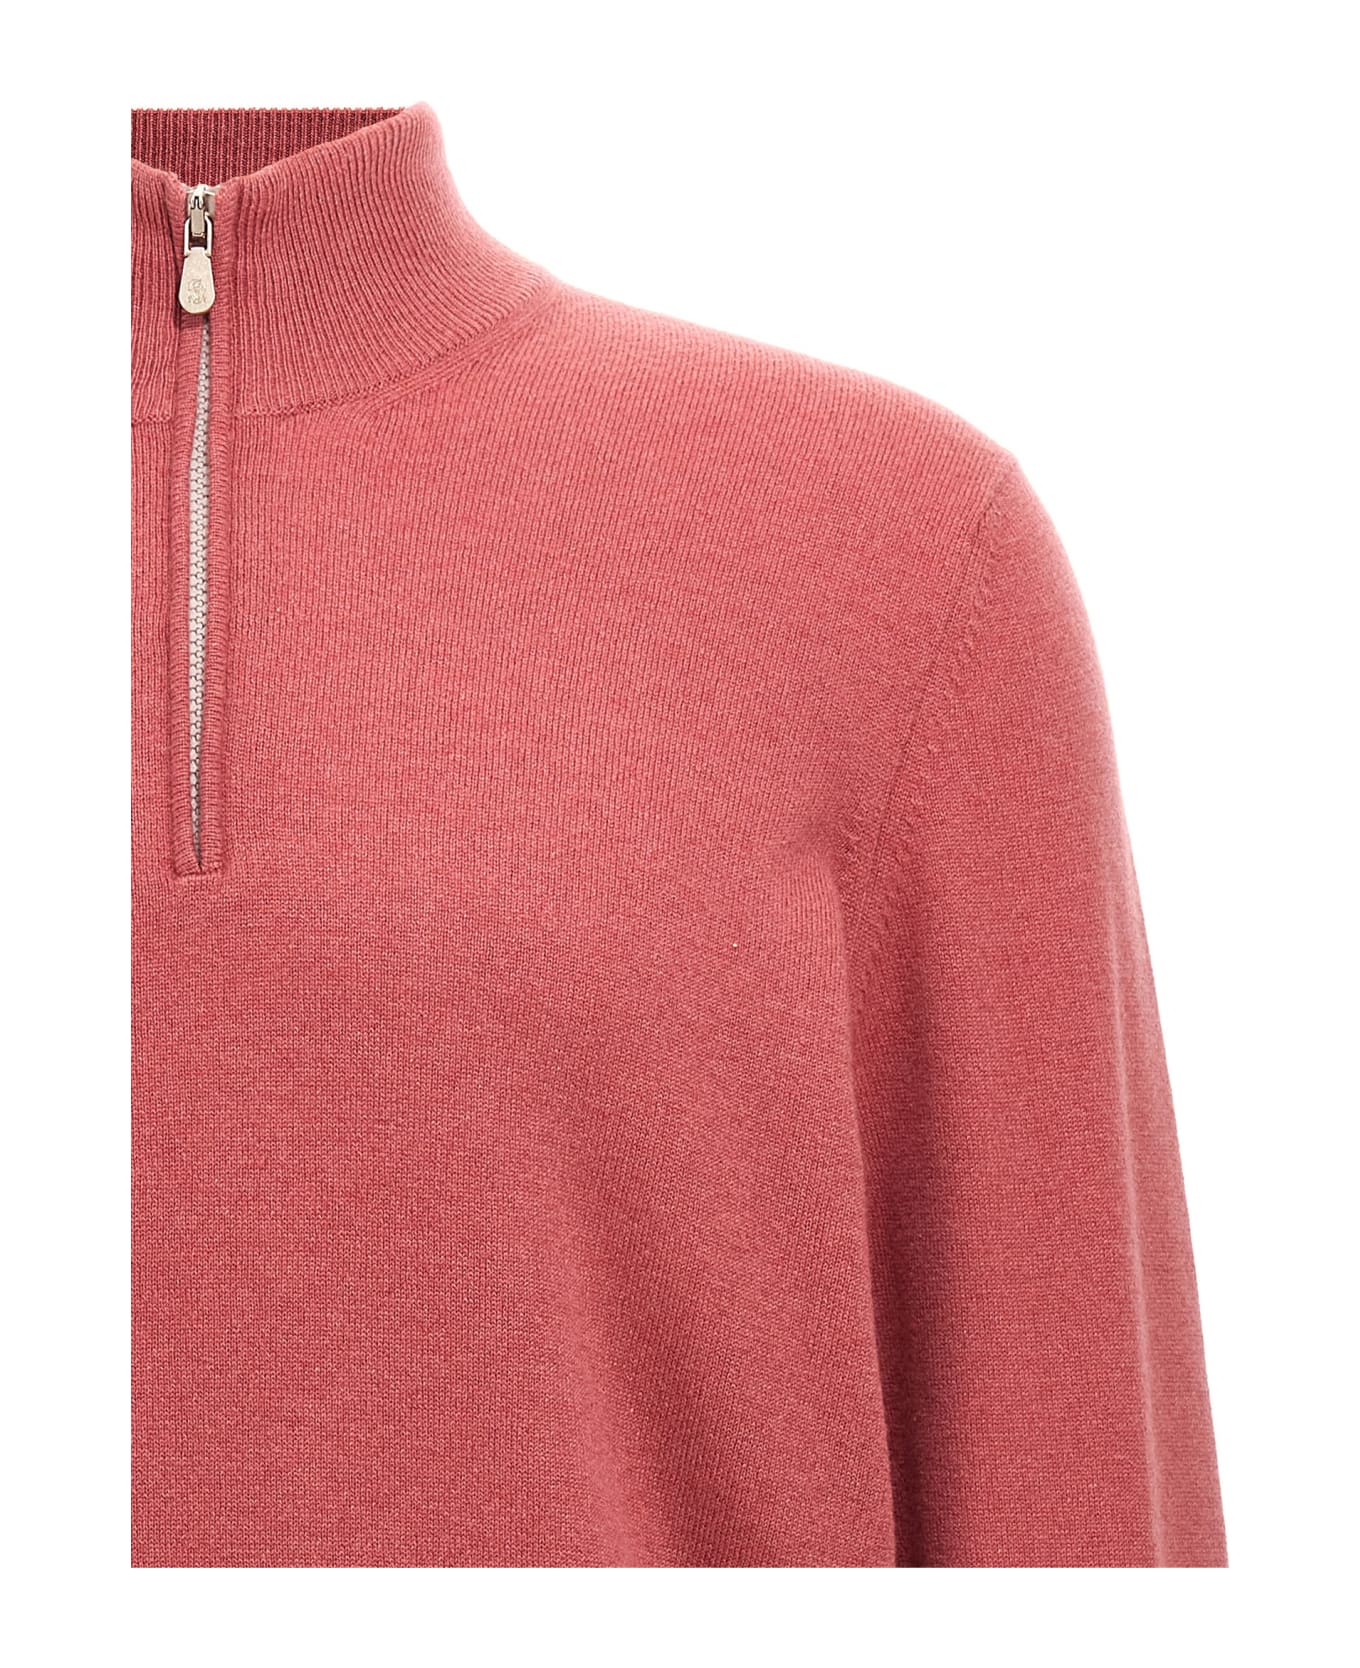 Brunello Cucinelli Cashmere Sweater - Pink ニットウェア